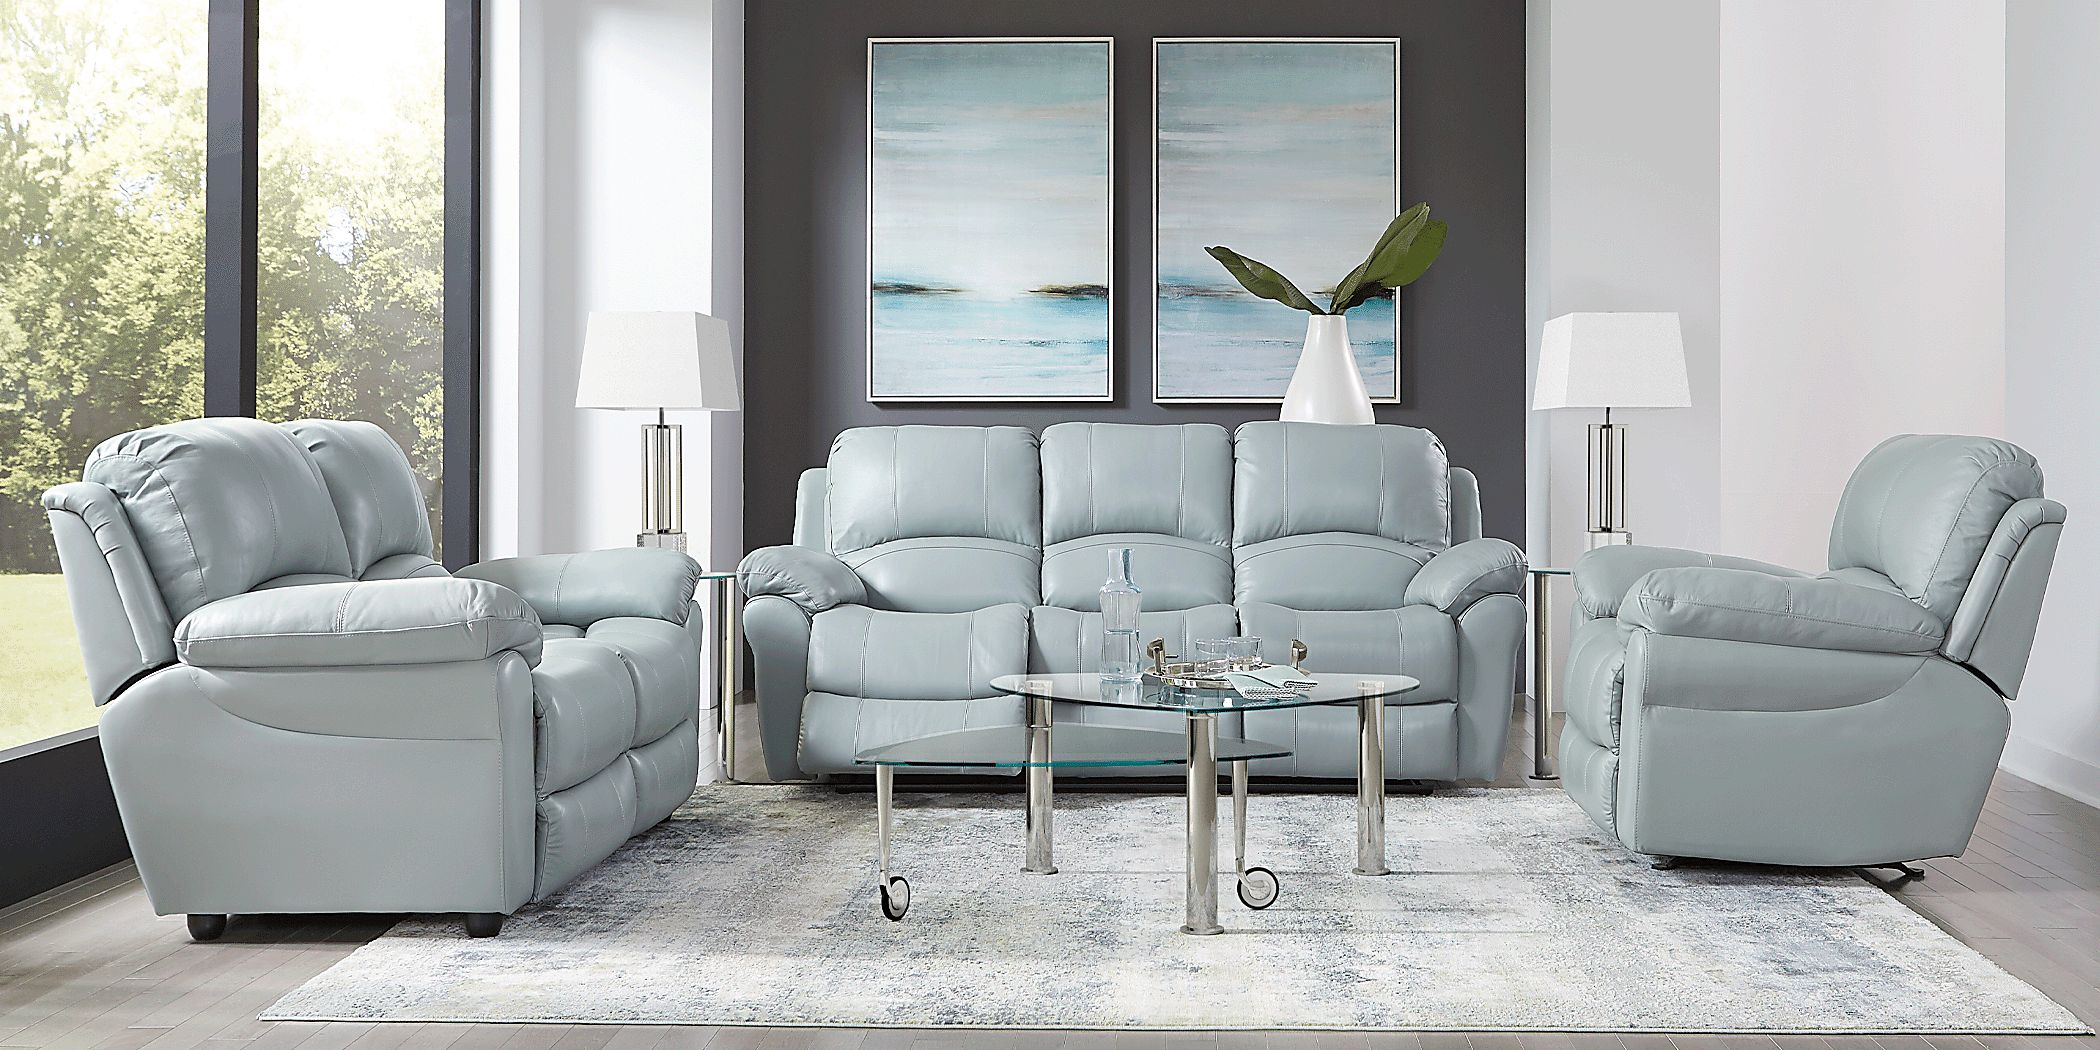 vercelli aqua leather living room sofa